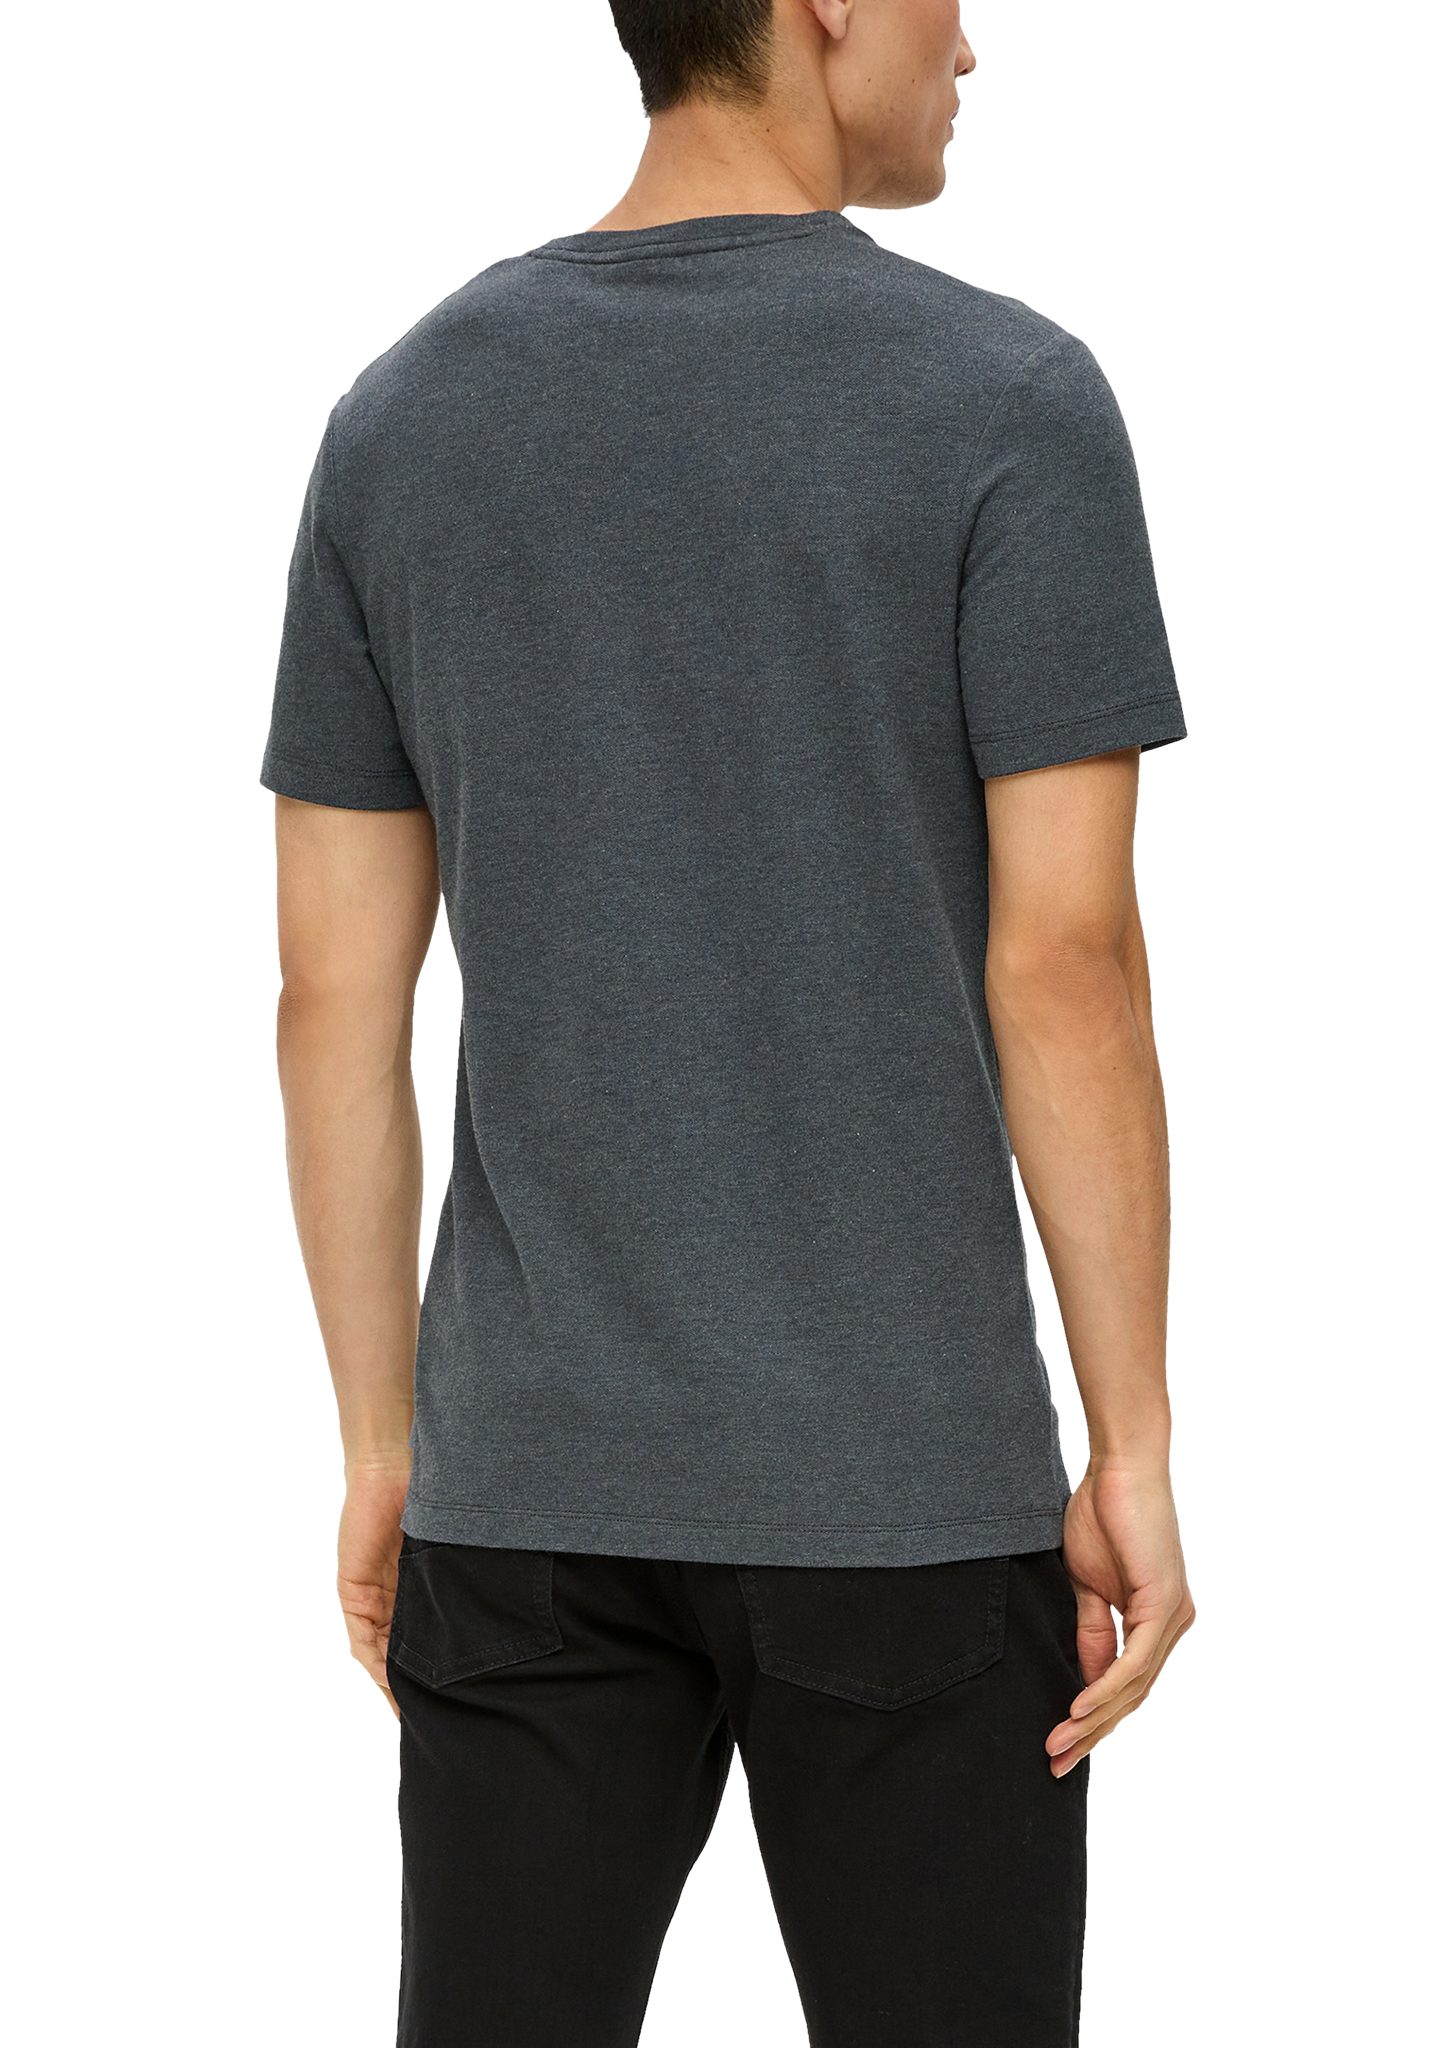 Kurzarmshirt mit s.Oliver T-Shirt dunkelgrau Piqué-Struktur Blende